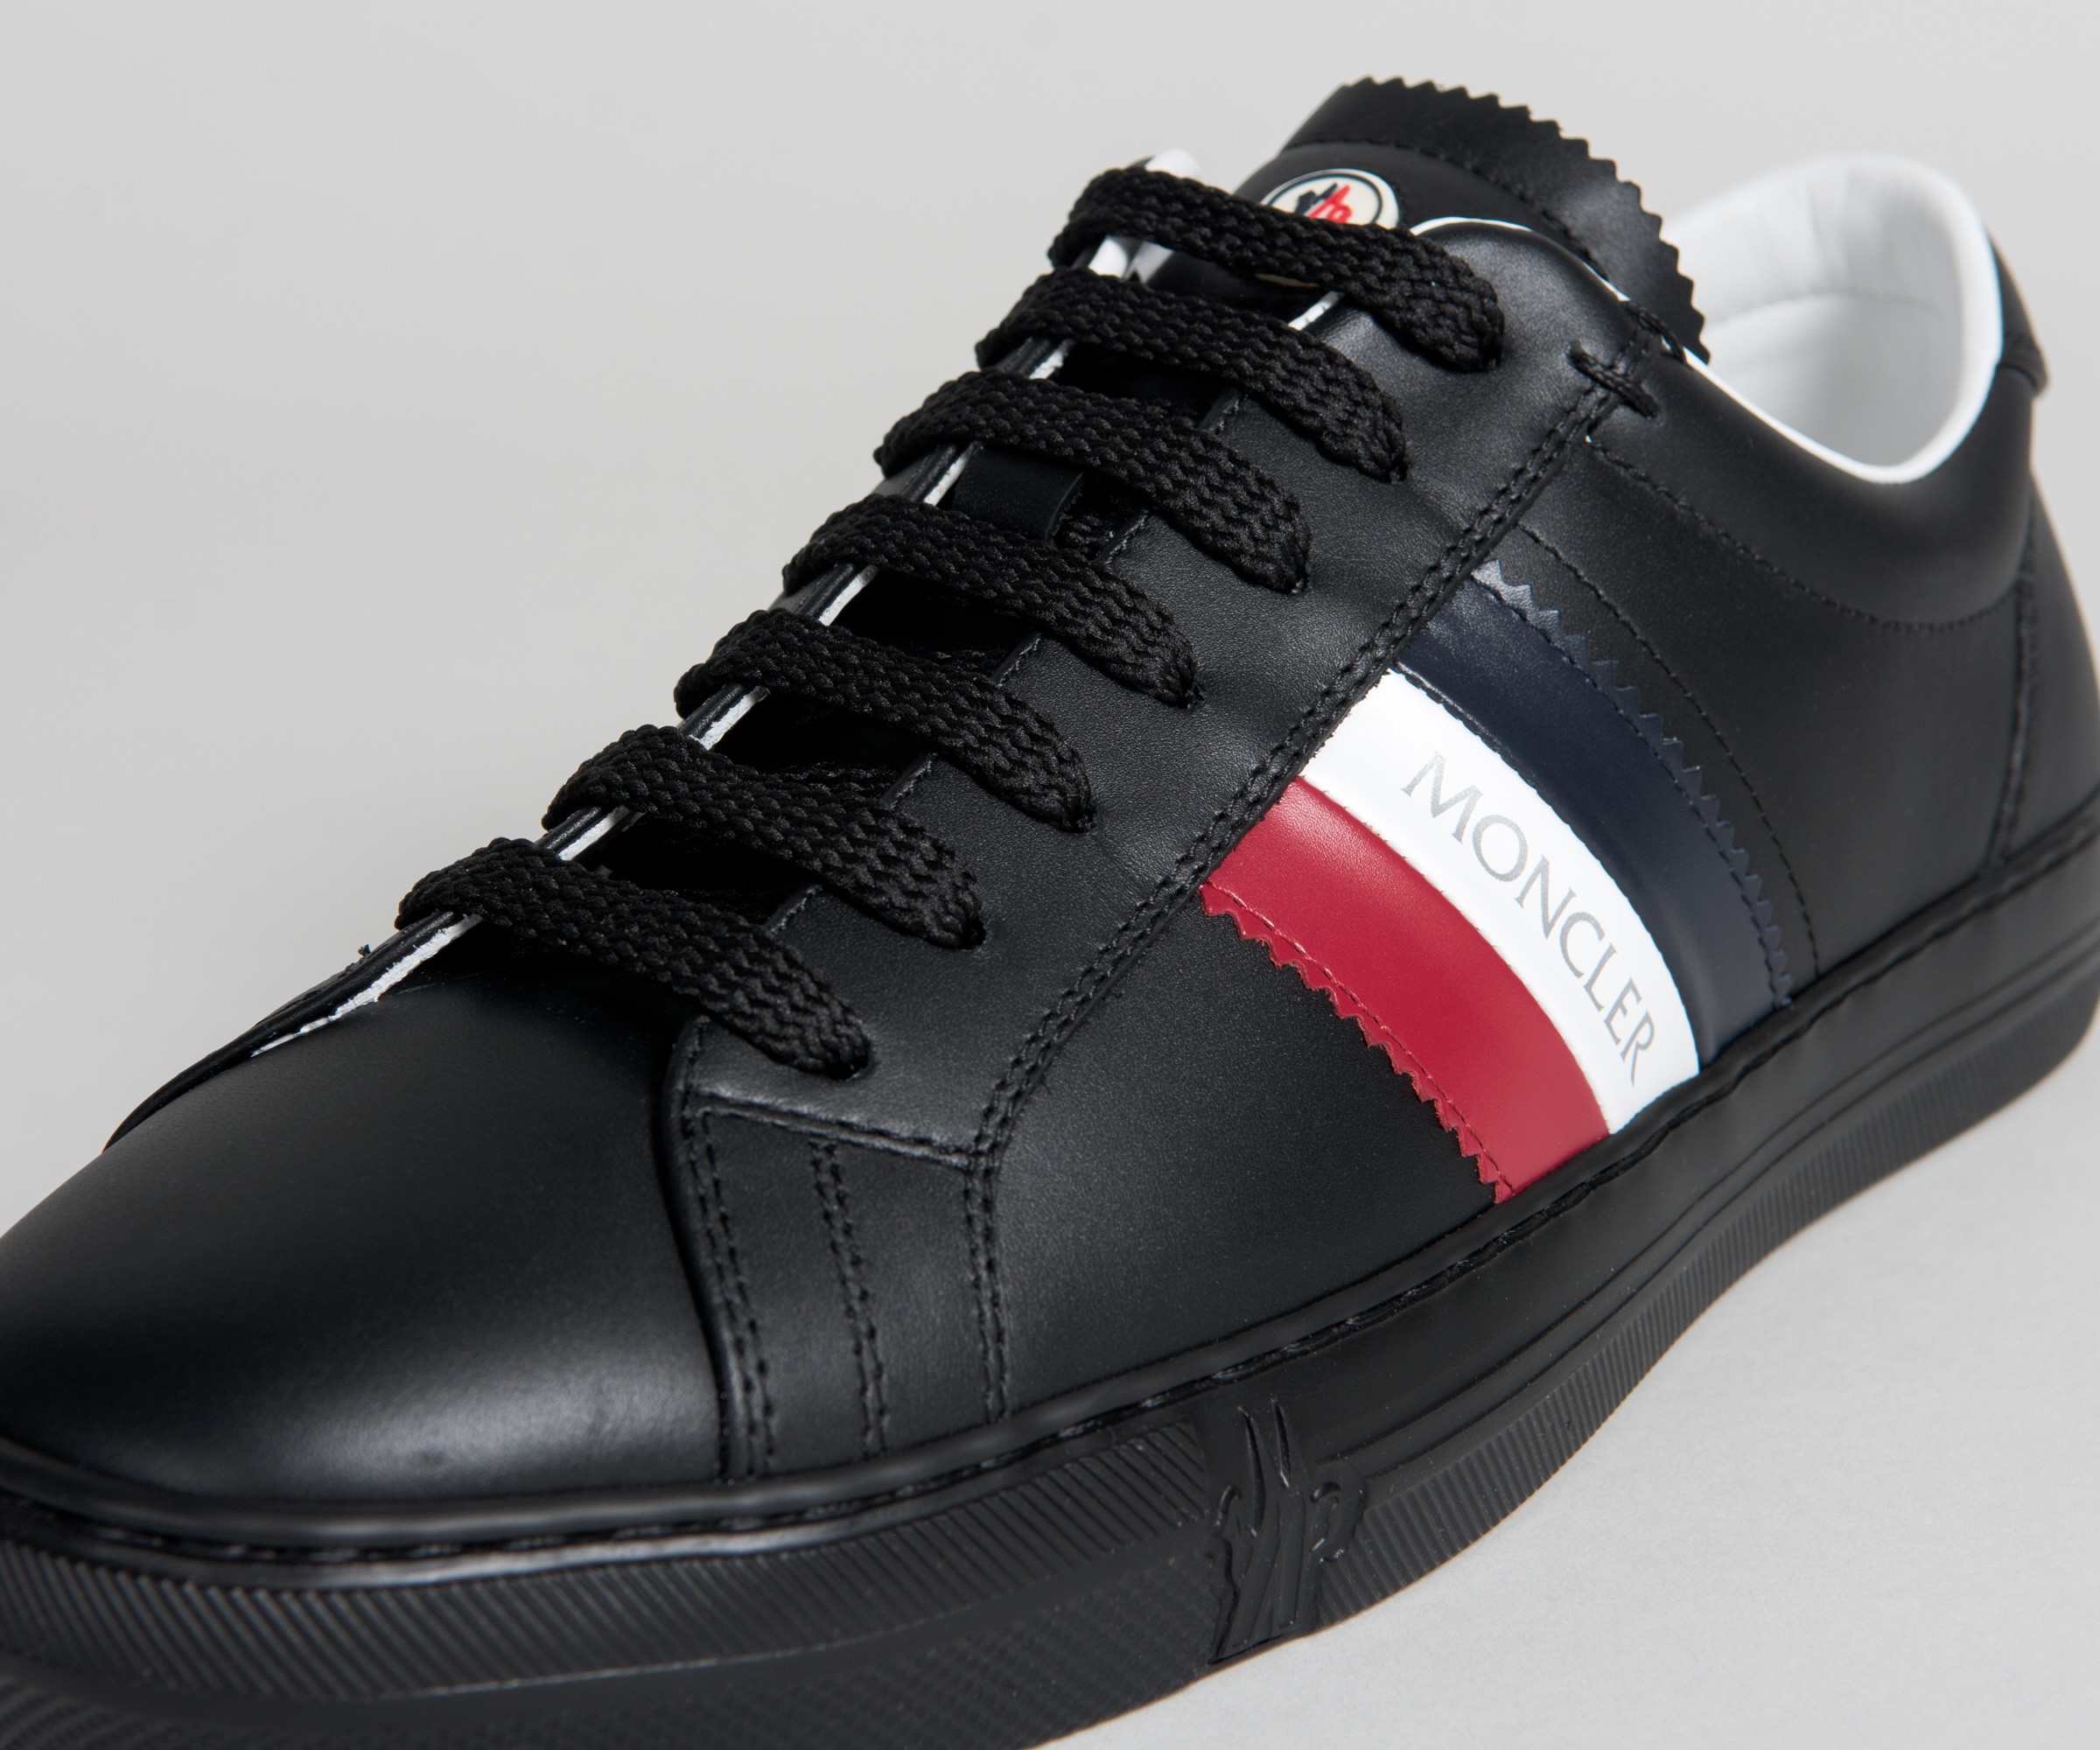 MONCLER Sneakers MONACO in black/ white/ red